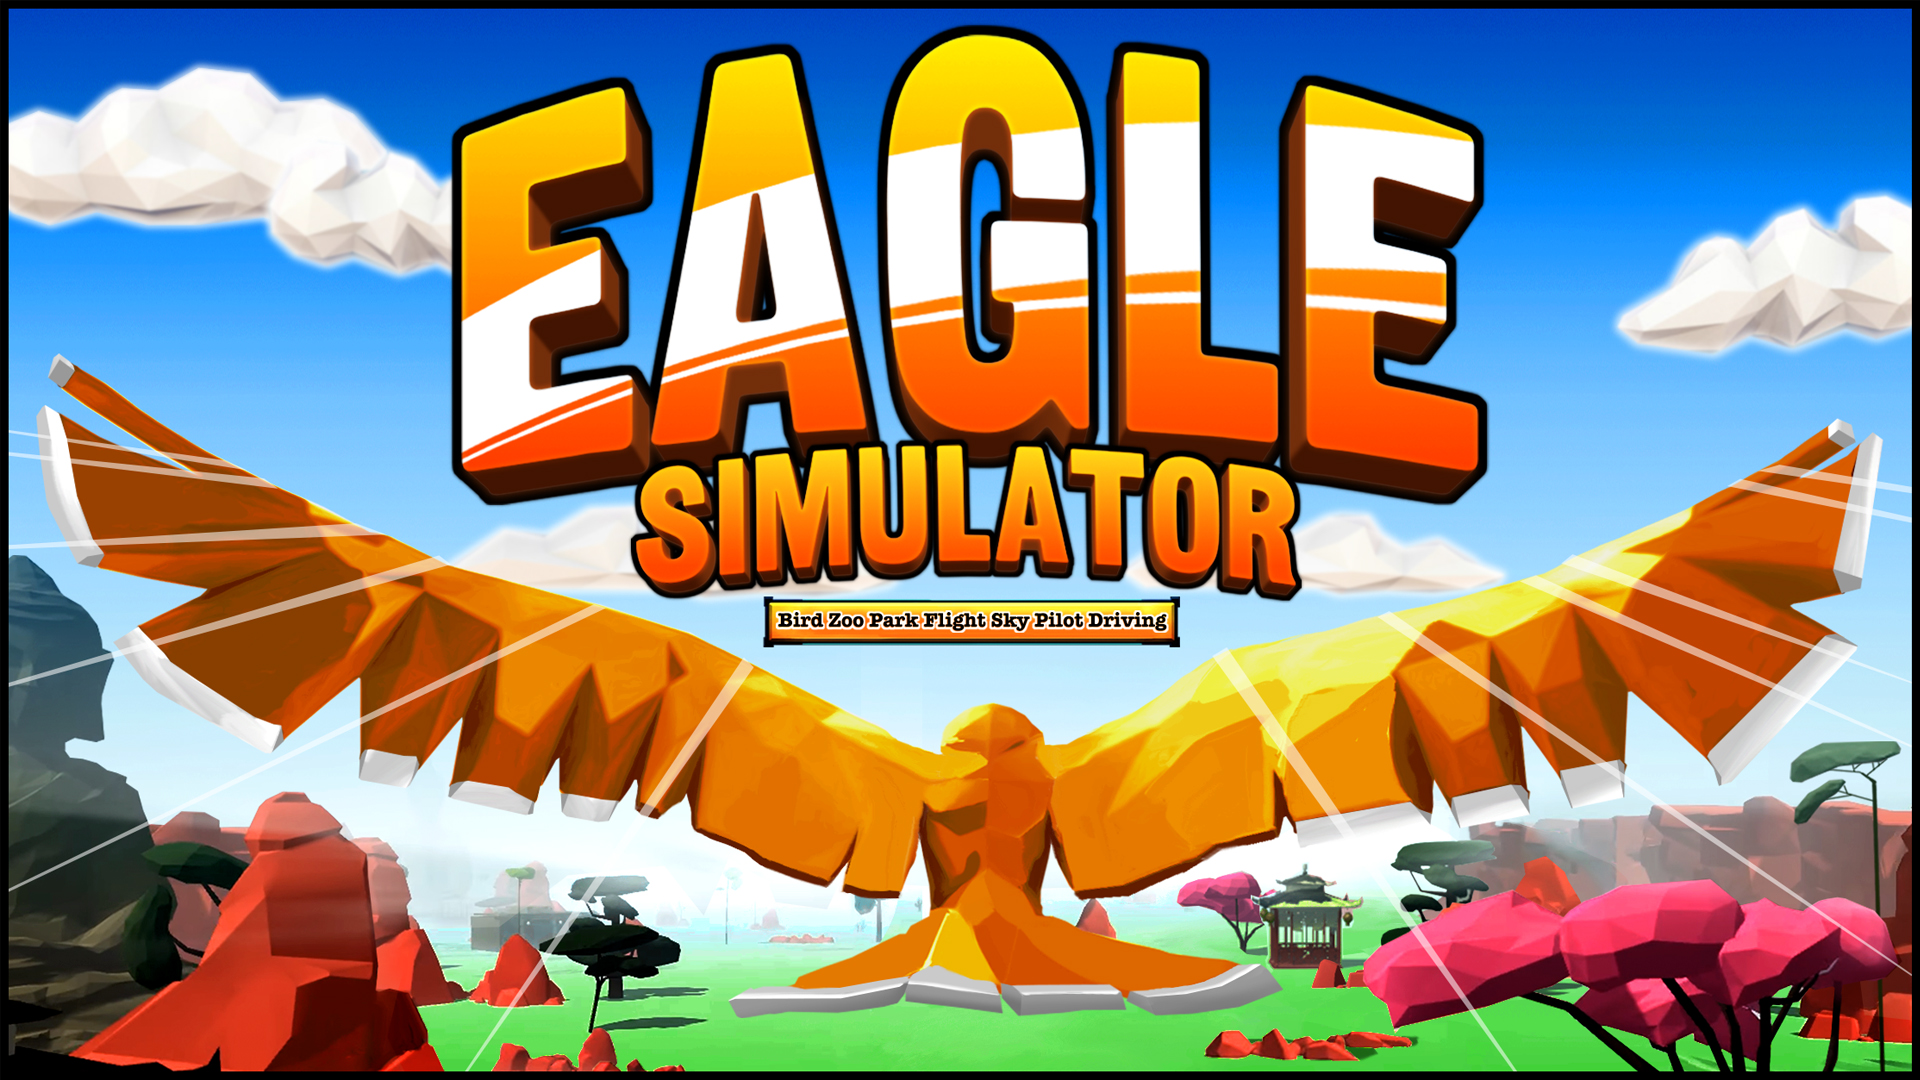 Eagle Simulator - Bird Zoo Park Flight Sky Pilot Driving